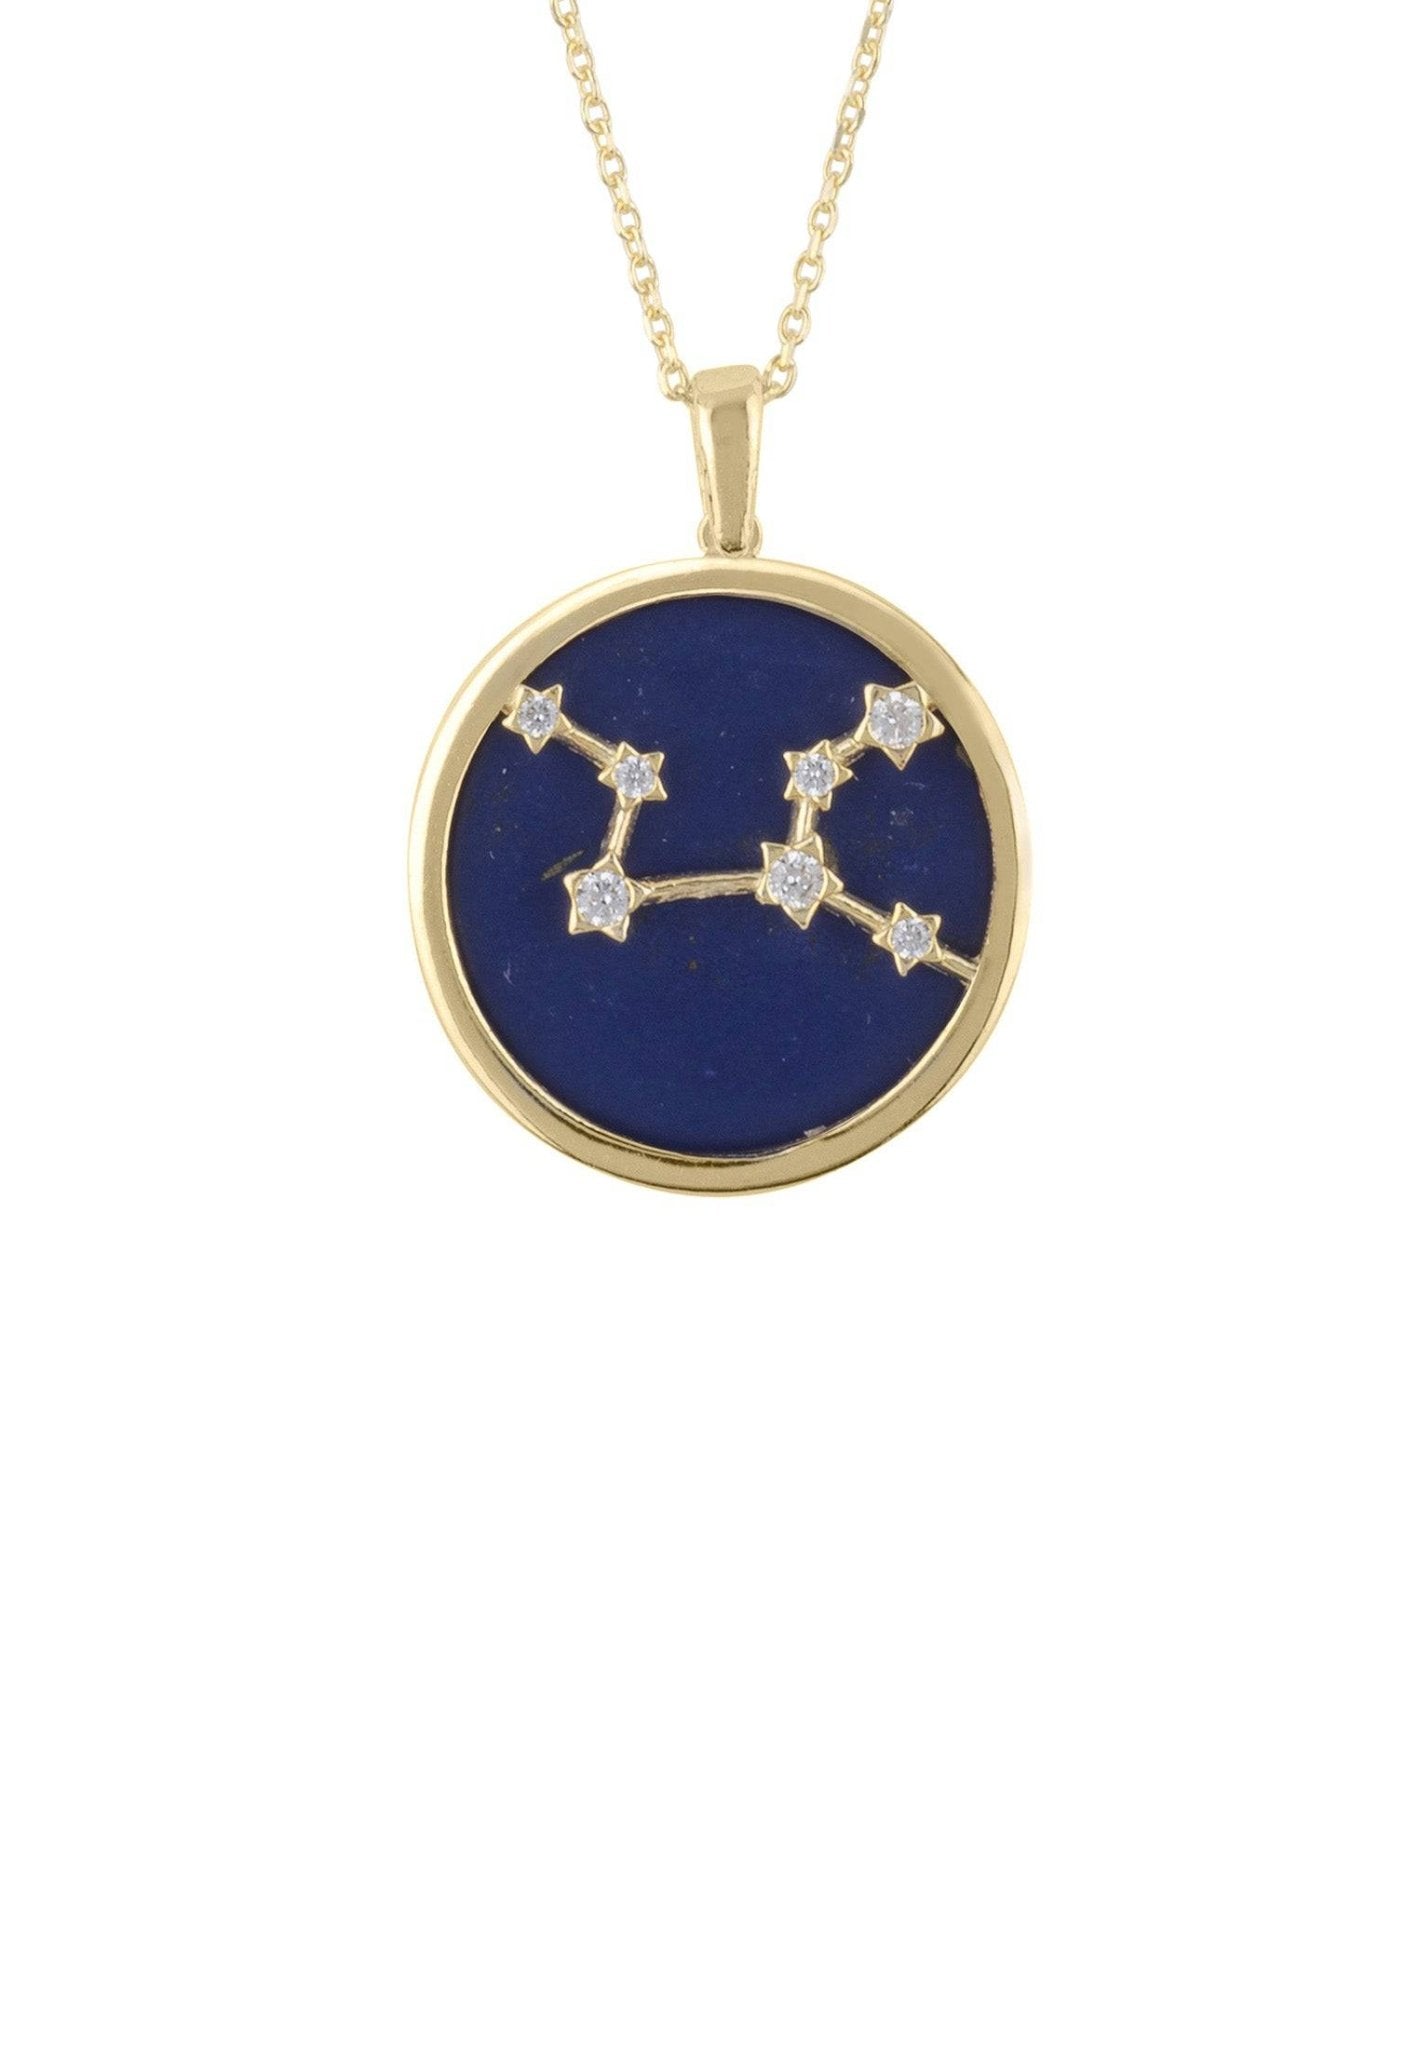 Personalized Necklaces - Zodiac Lapis Lazuli Constellation Pendant Necklace Gold Virgo 